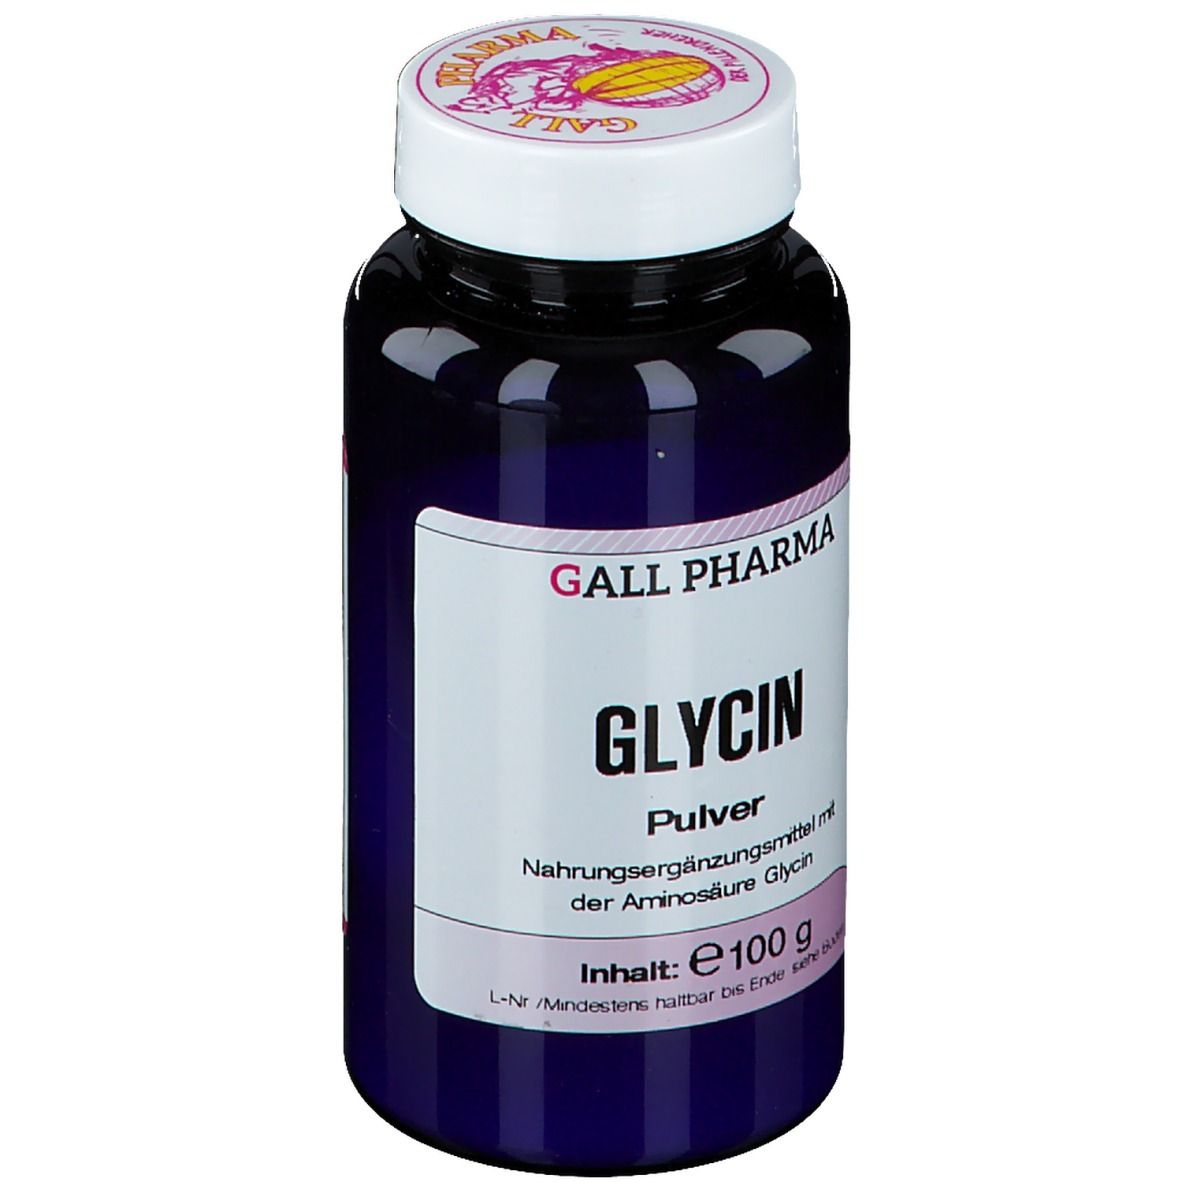 GALL PHARMA Glycin Pulver